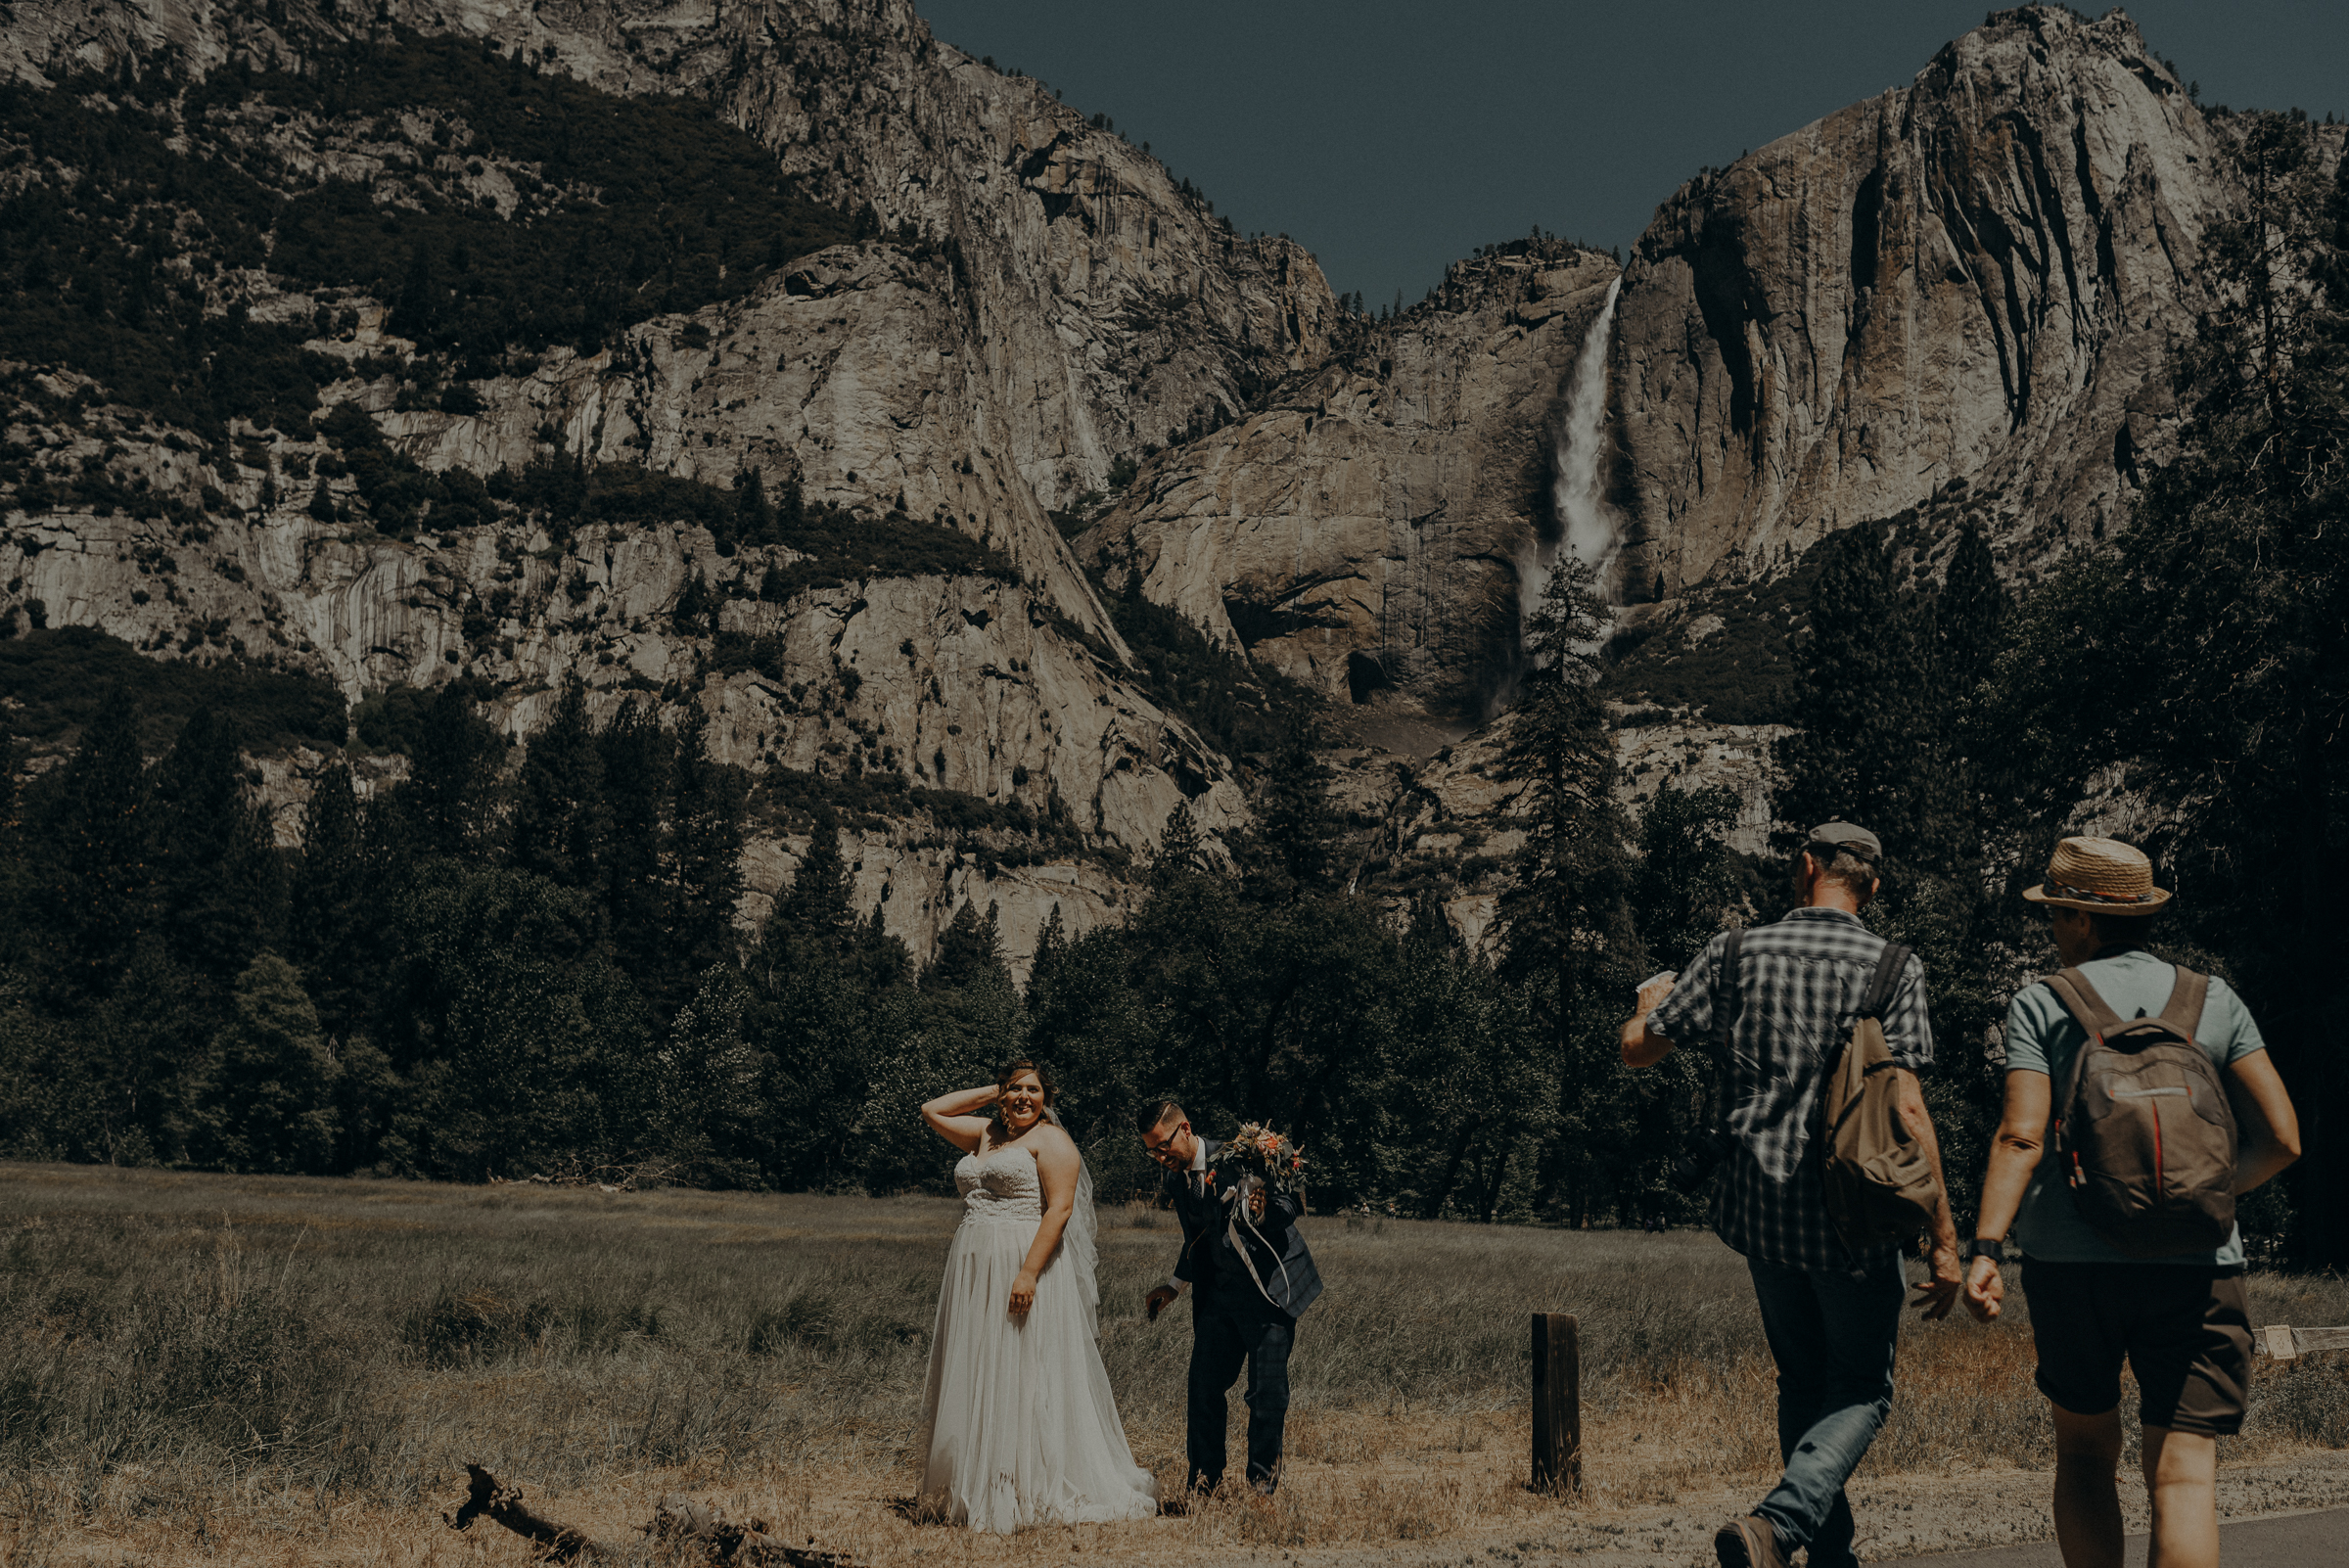 Los Angeles Wedding Photographers - Yosemite Destination Wedding Elopement - IsaiahAndTaylor.com -086.jpg